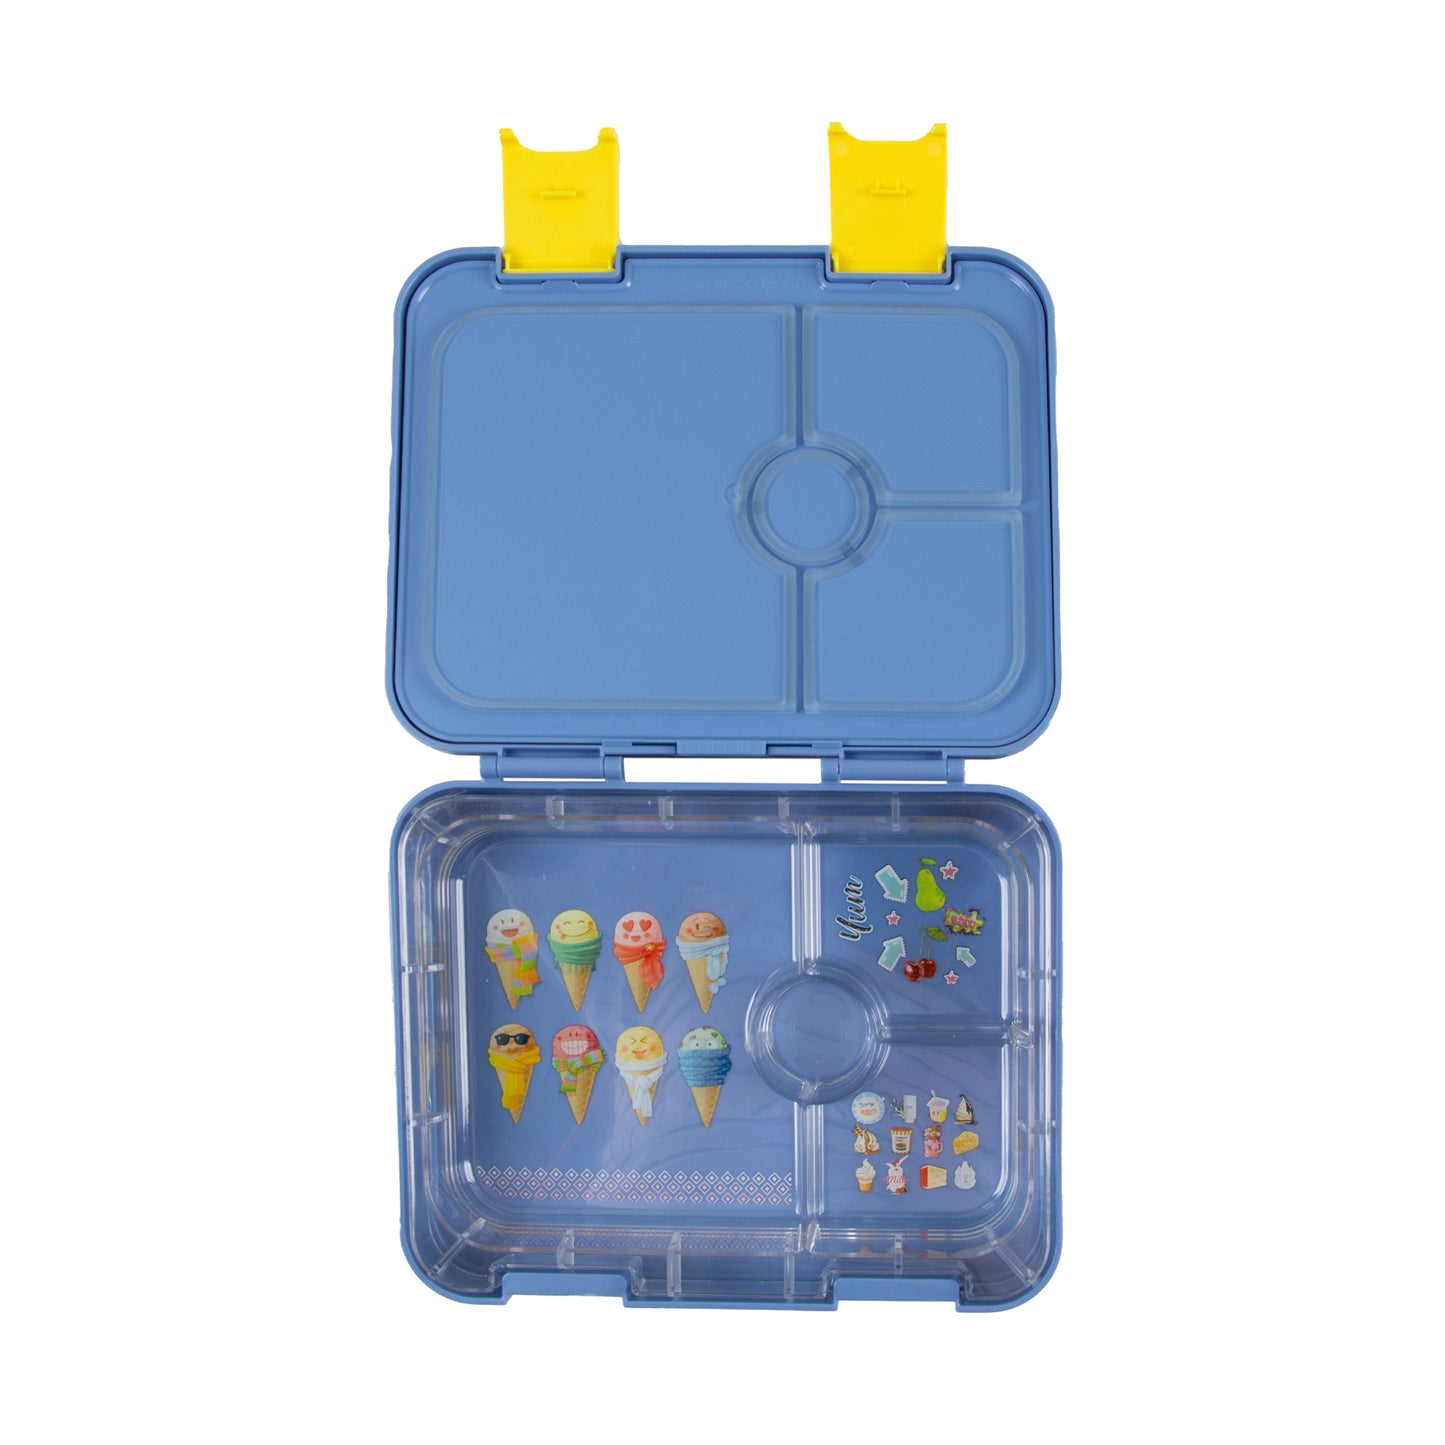 Citron Australia Kids Bento Lunchbox - 4 compartments With Accessories - Superhero